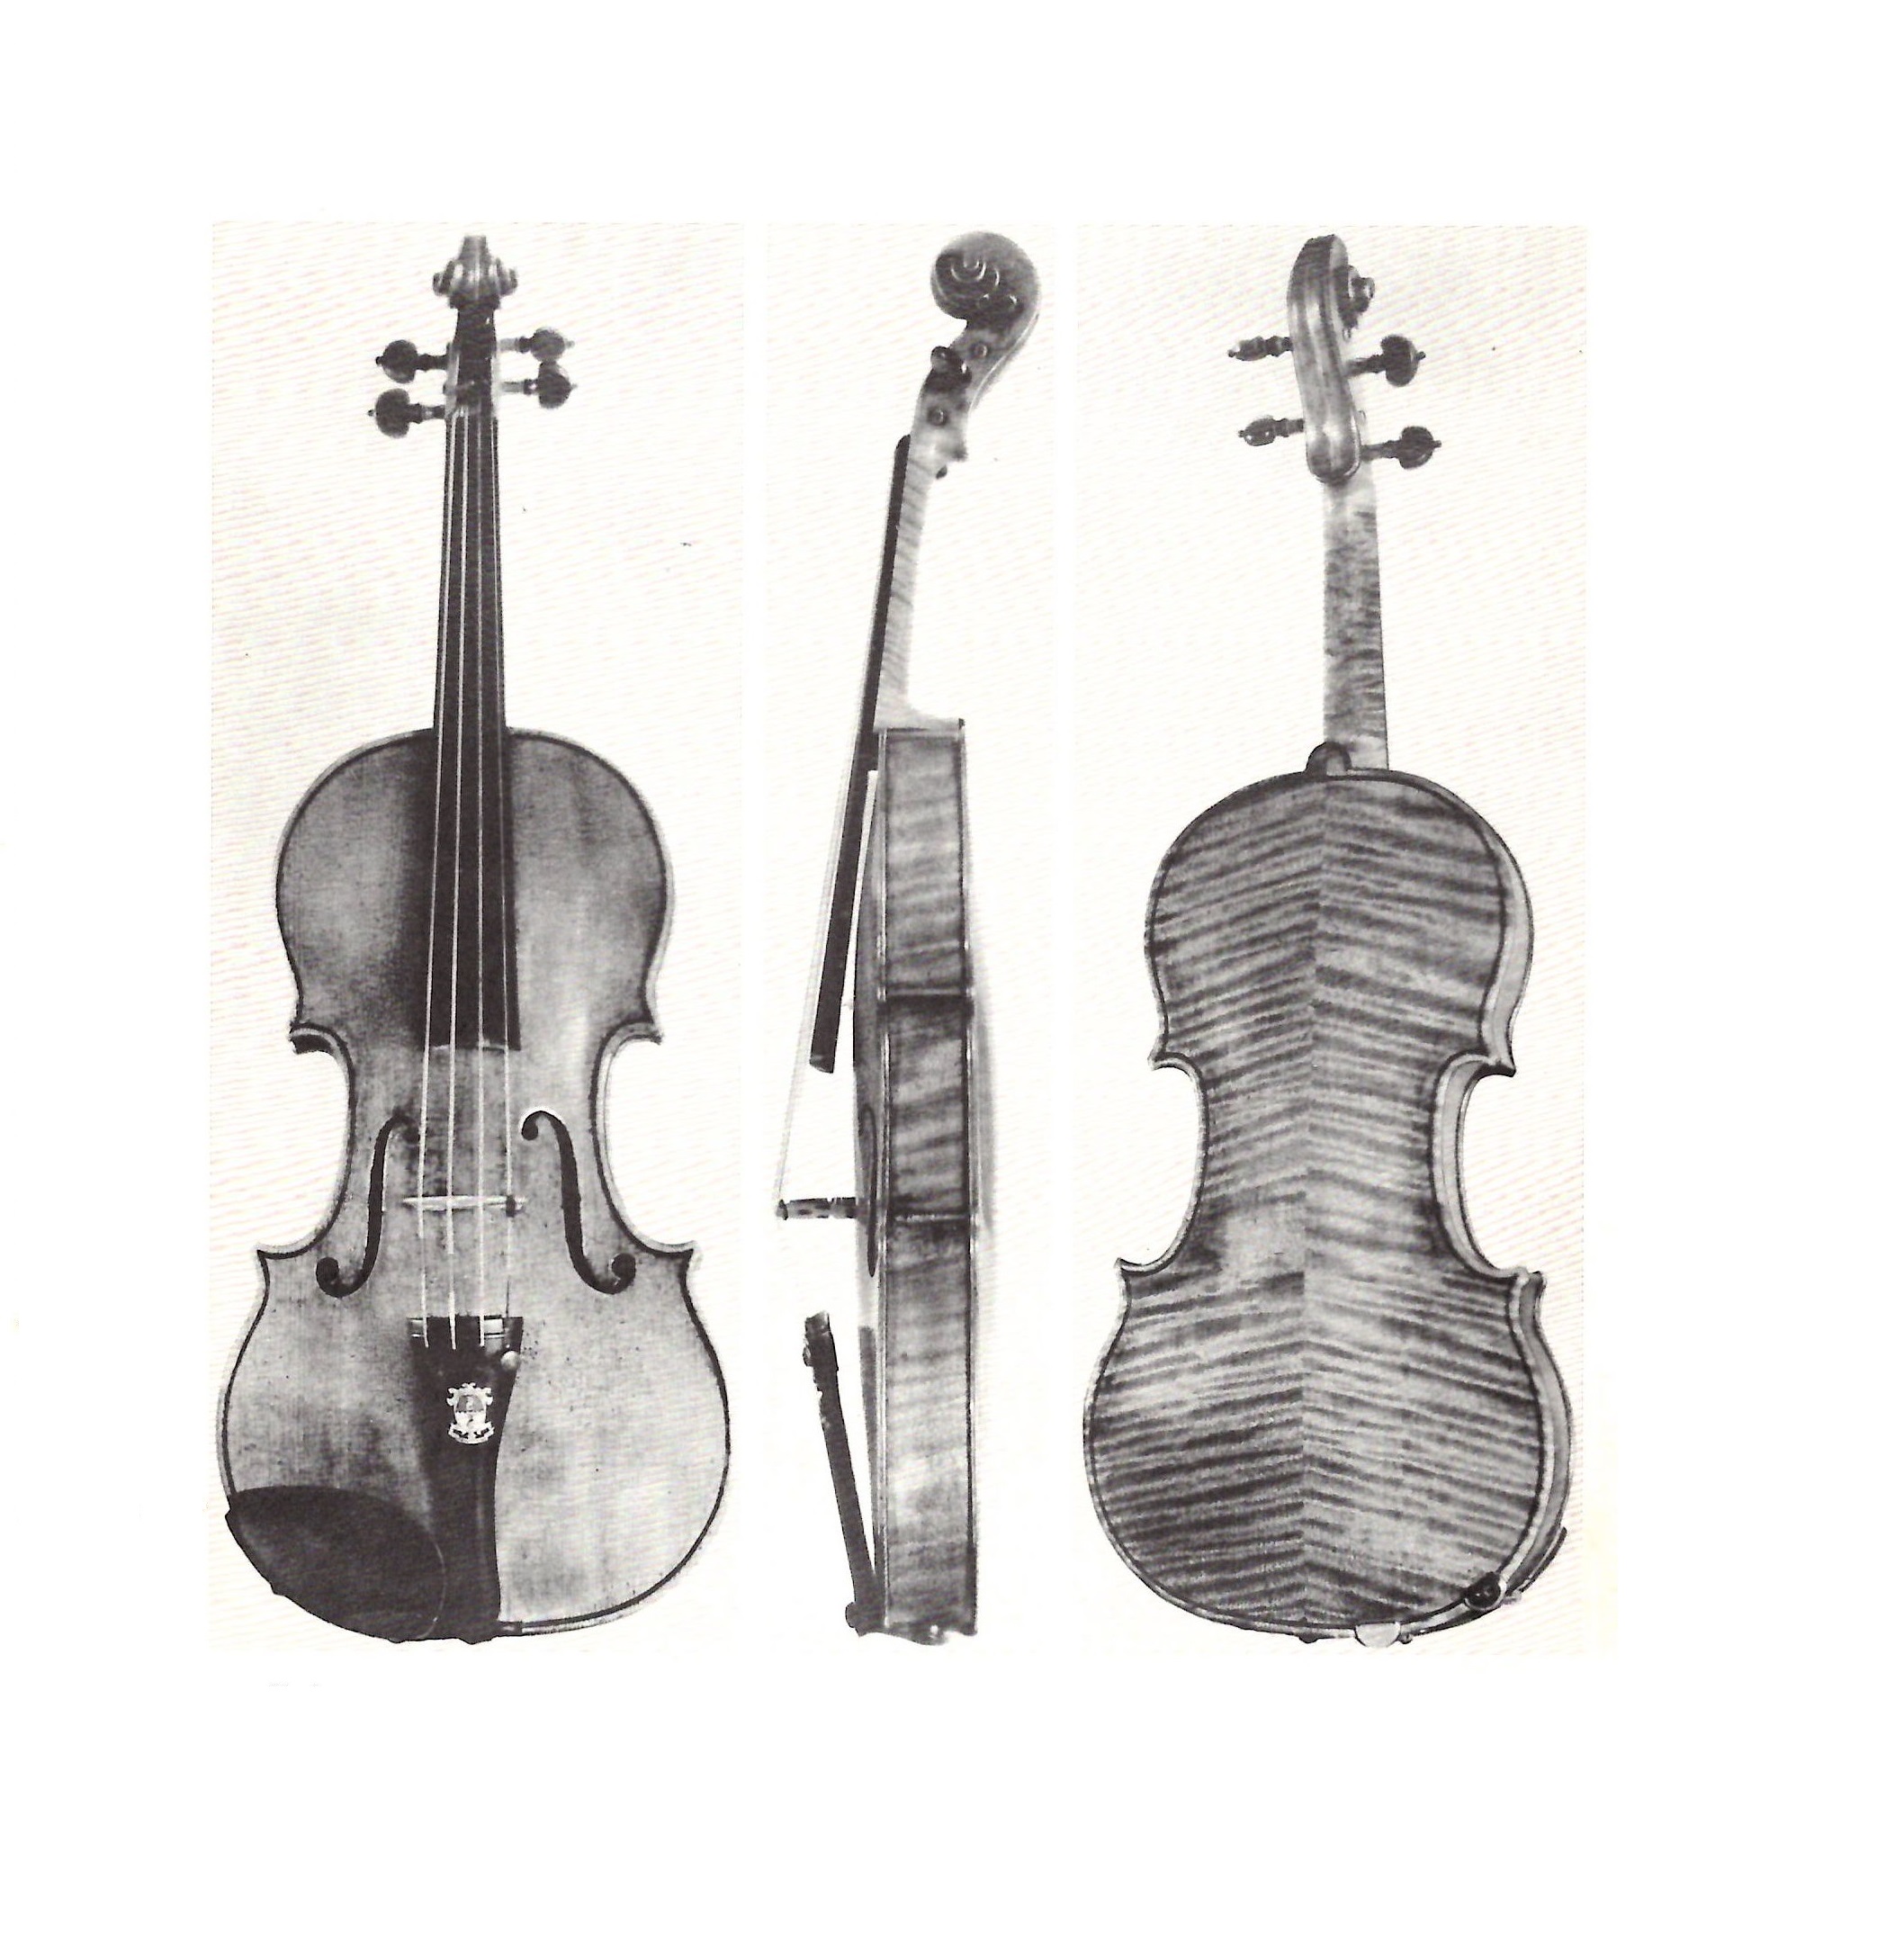 The Piatti photographed in Violin Iconography of Antonio Stradivari by Herbert Goodkind